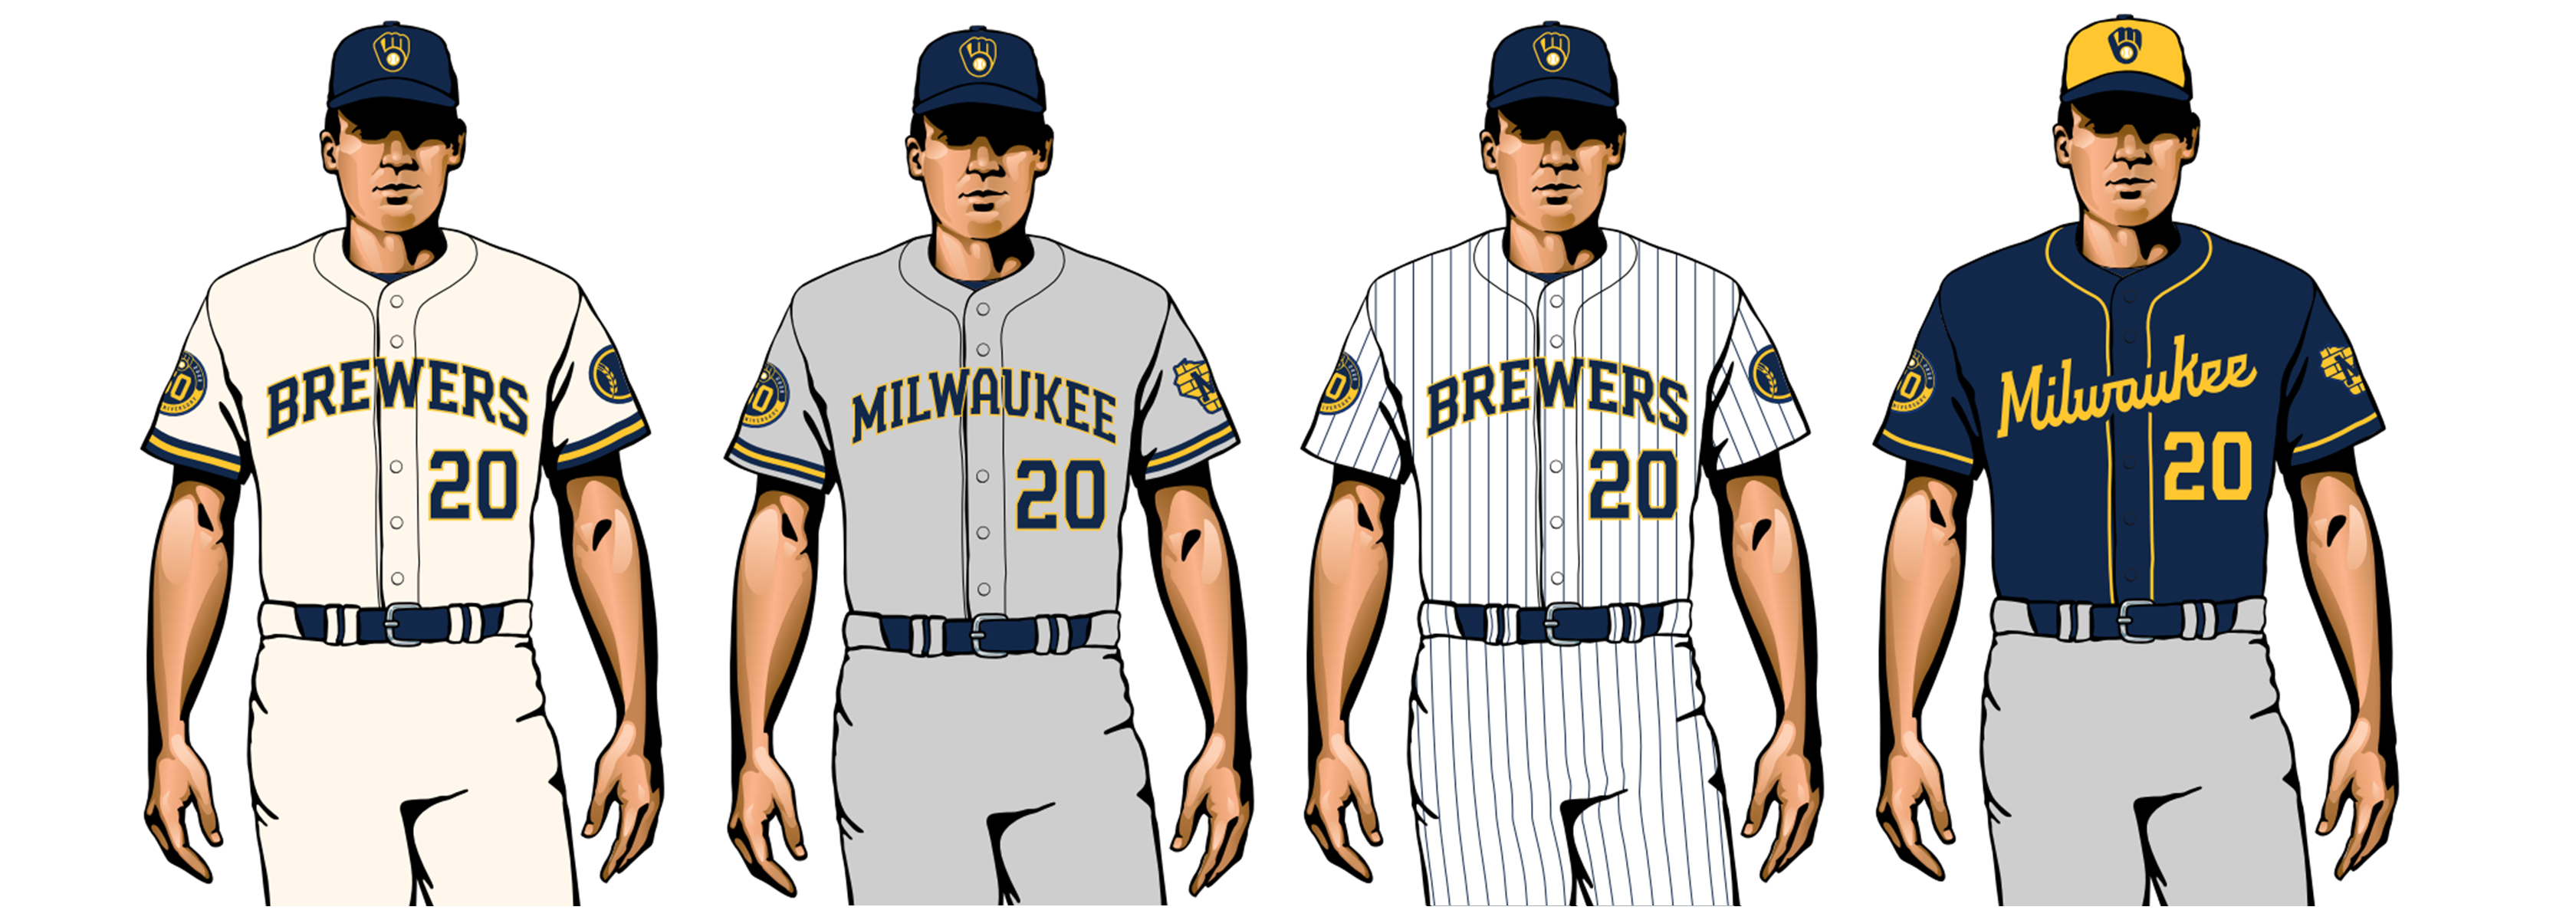 milwaukee brewers 2020 uniforms